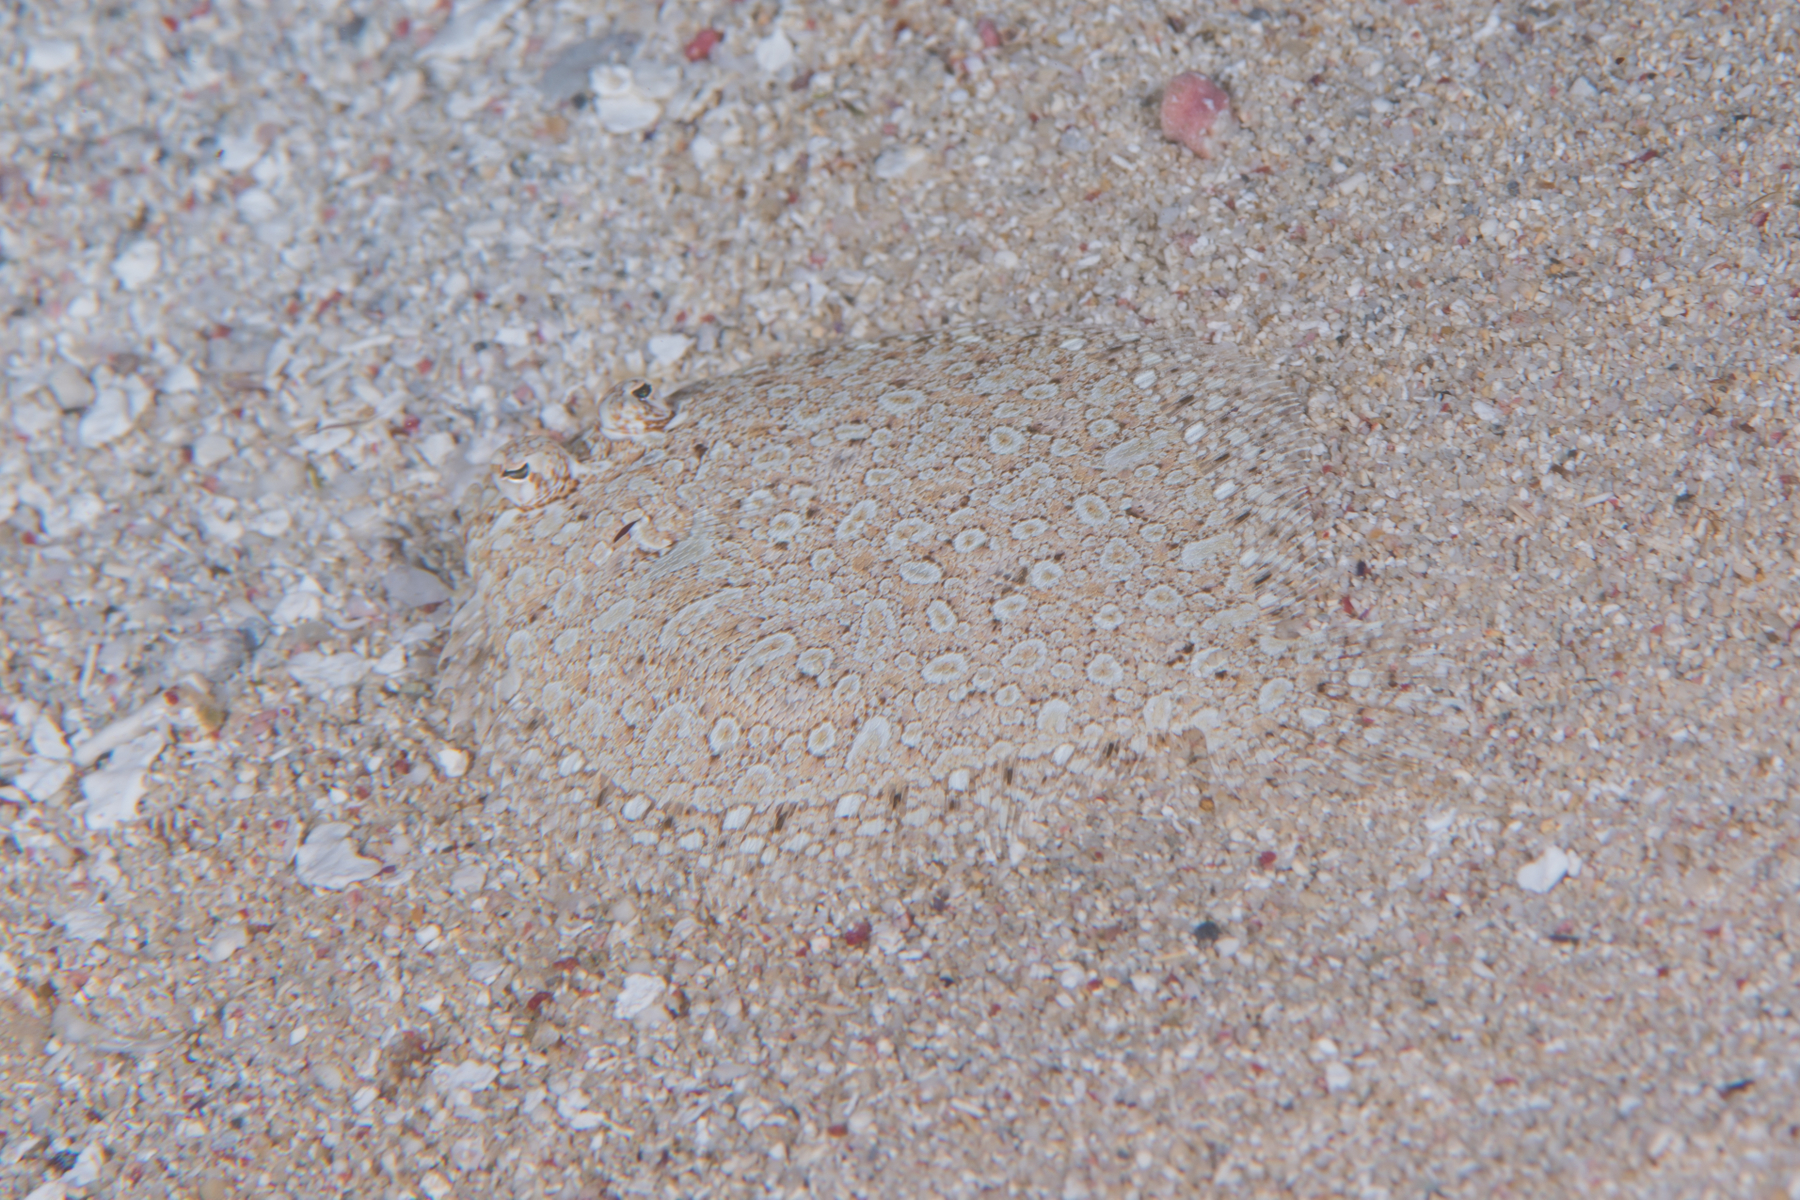 10/7/2021Peeking Flounder hiding on the sand.